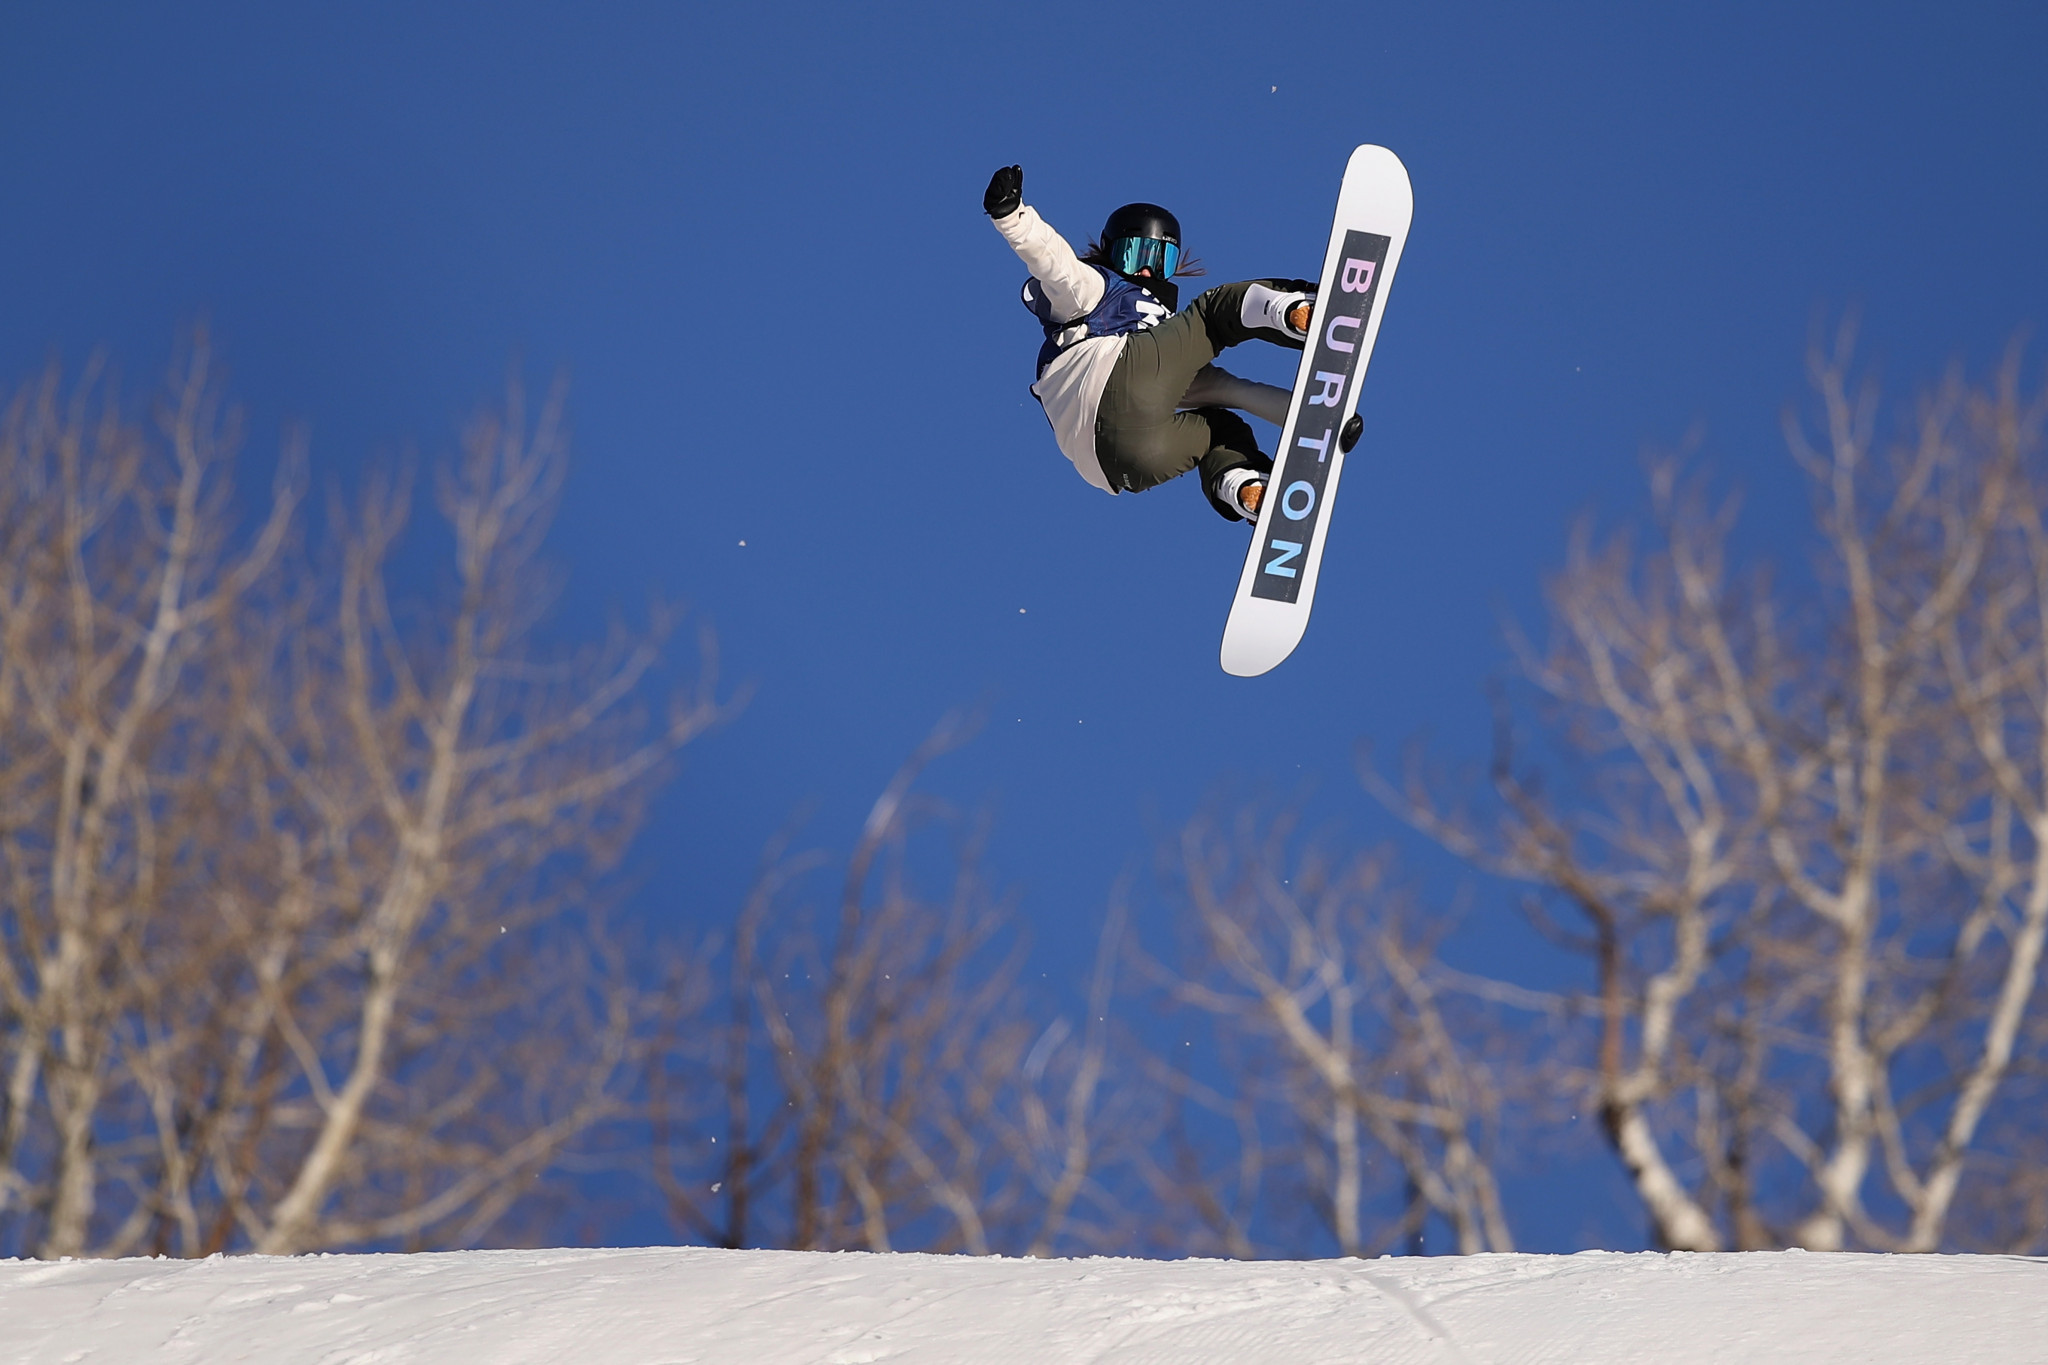 Hungary's Kamilla Emma Kozuback triumphed in the women's snowboard big air in Vuokatti ©Getty Images